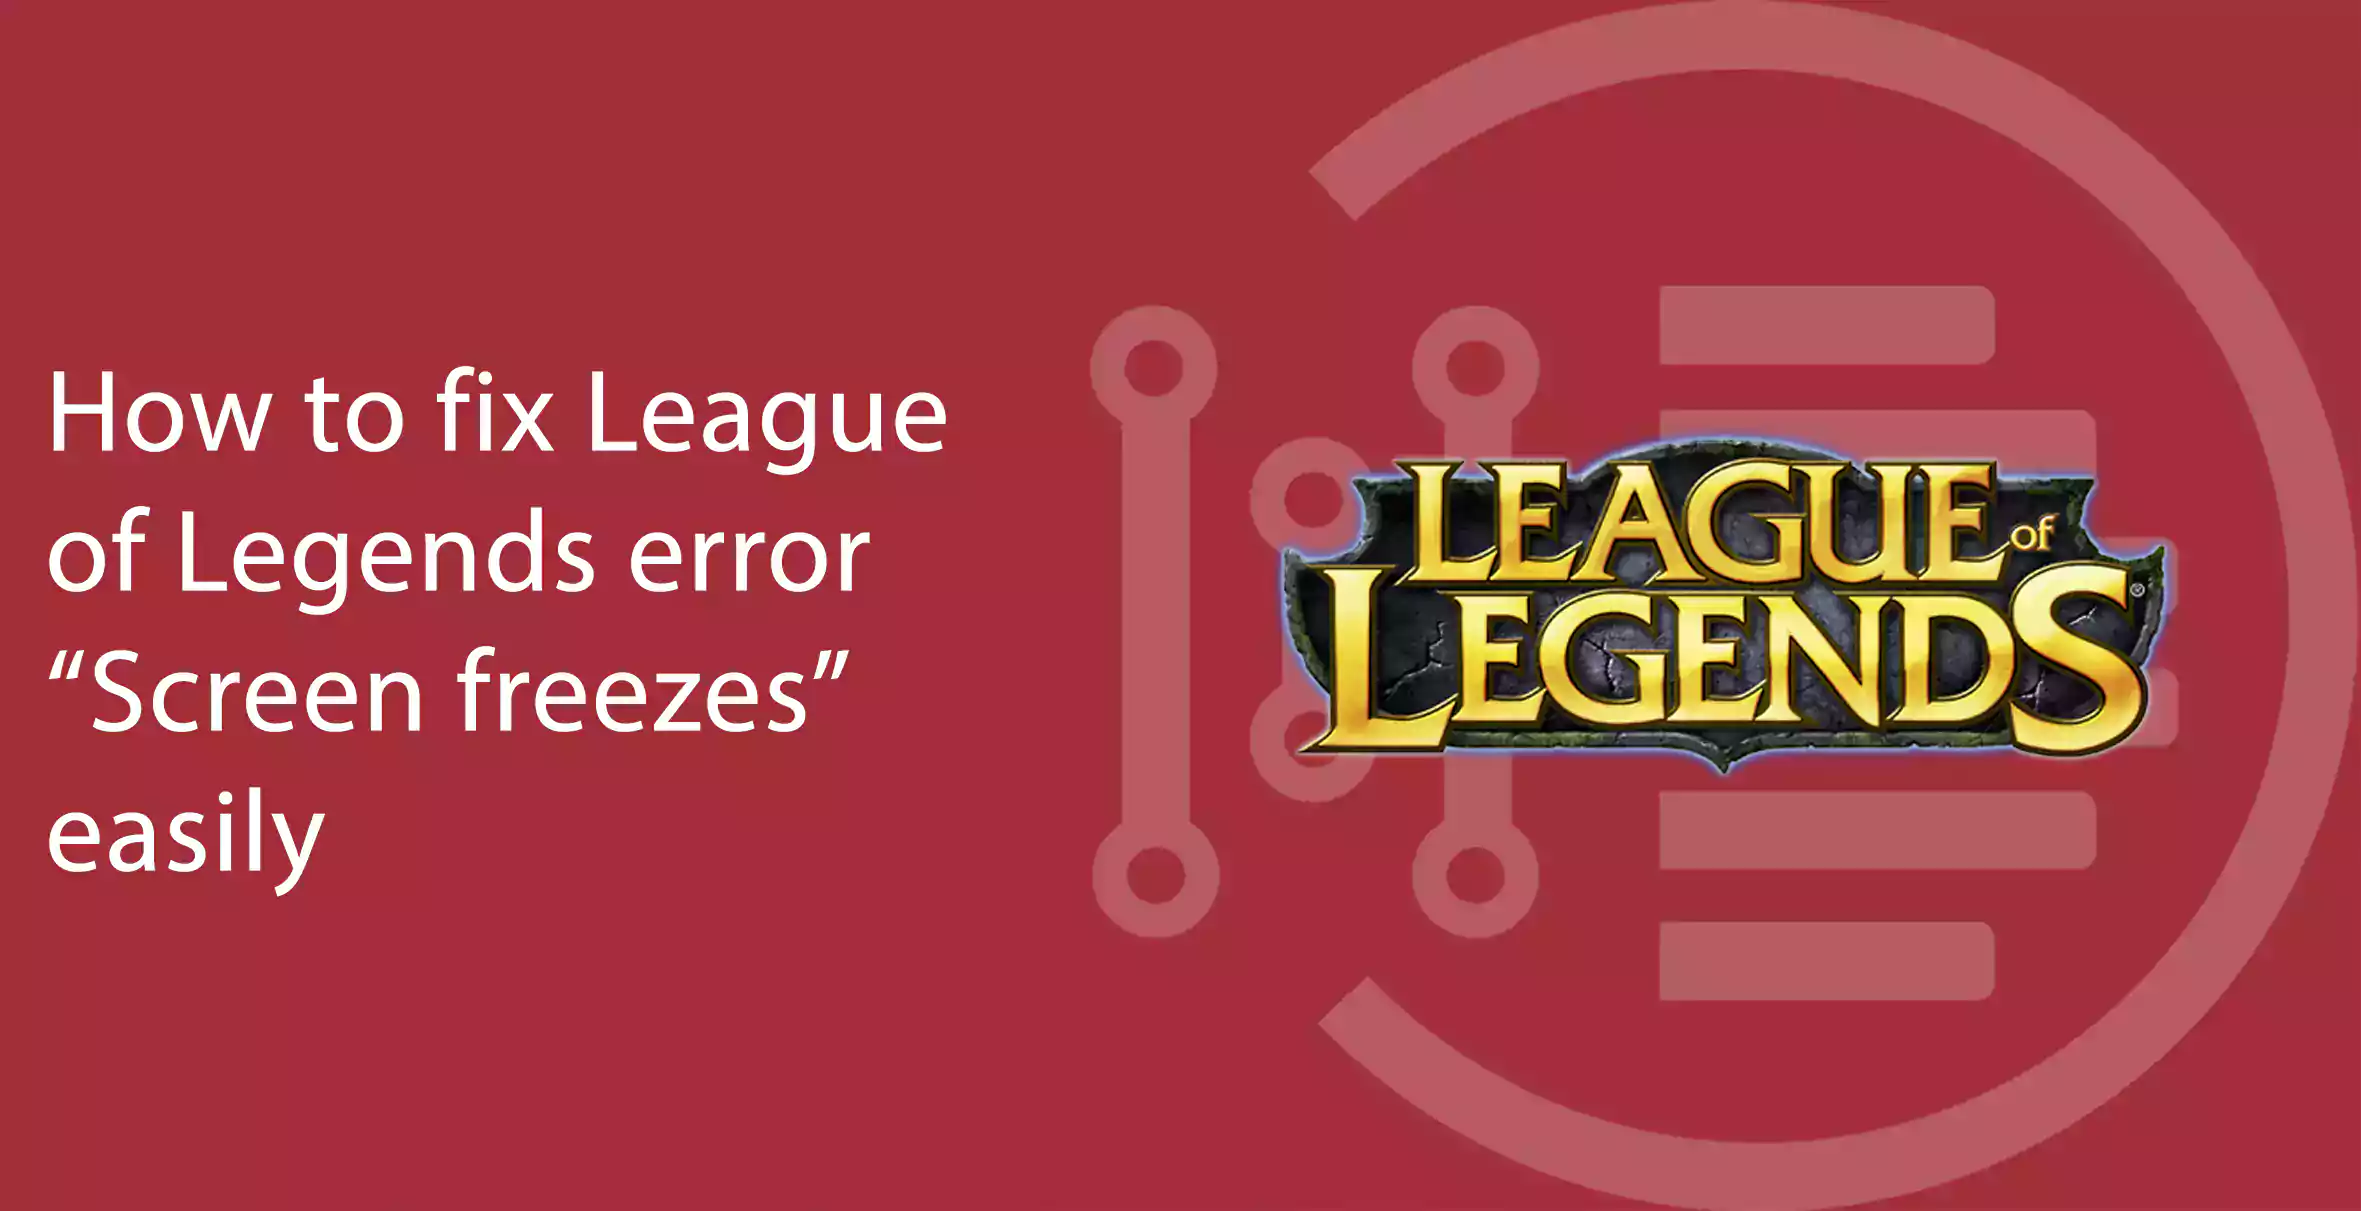 How to fix League of Legends error “Screen freezes”